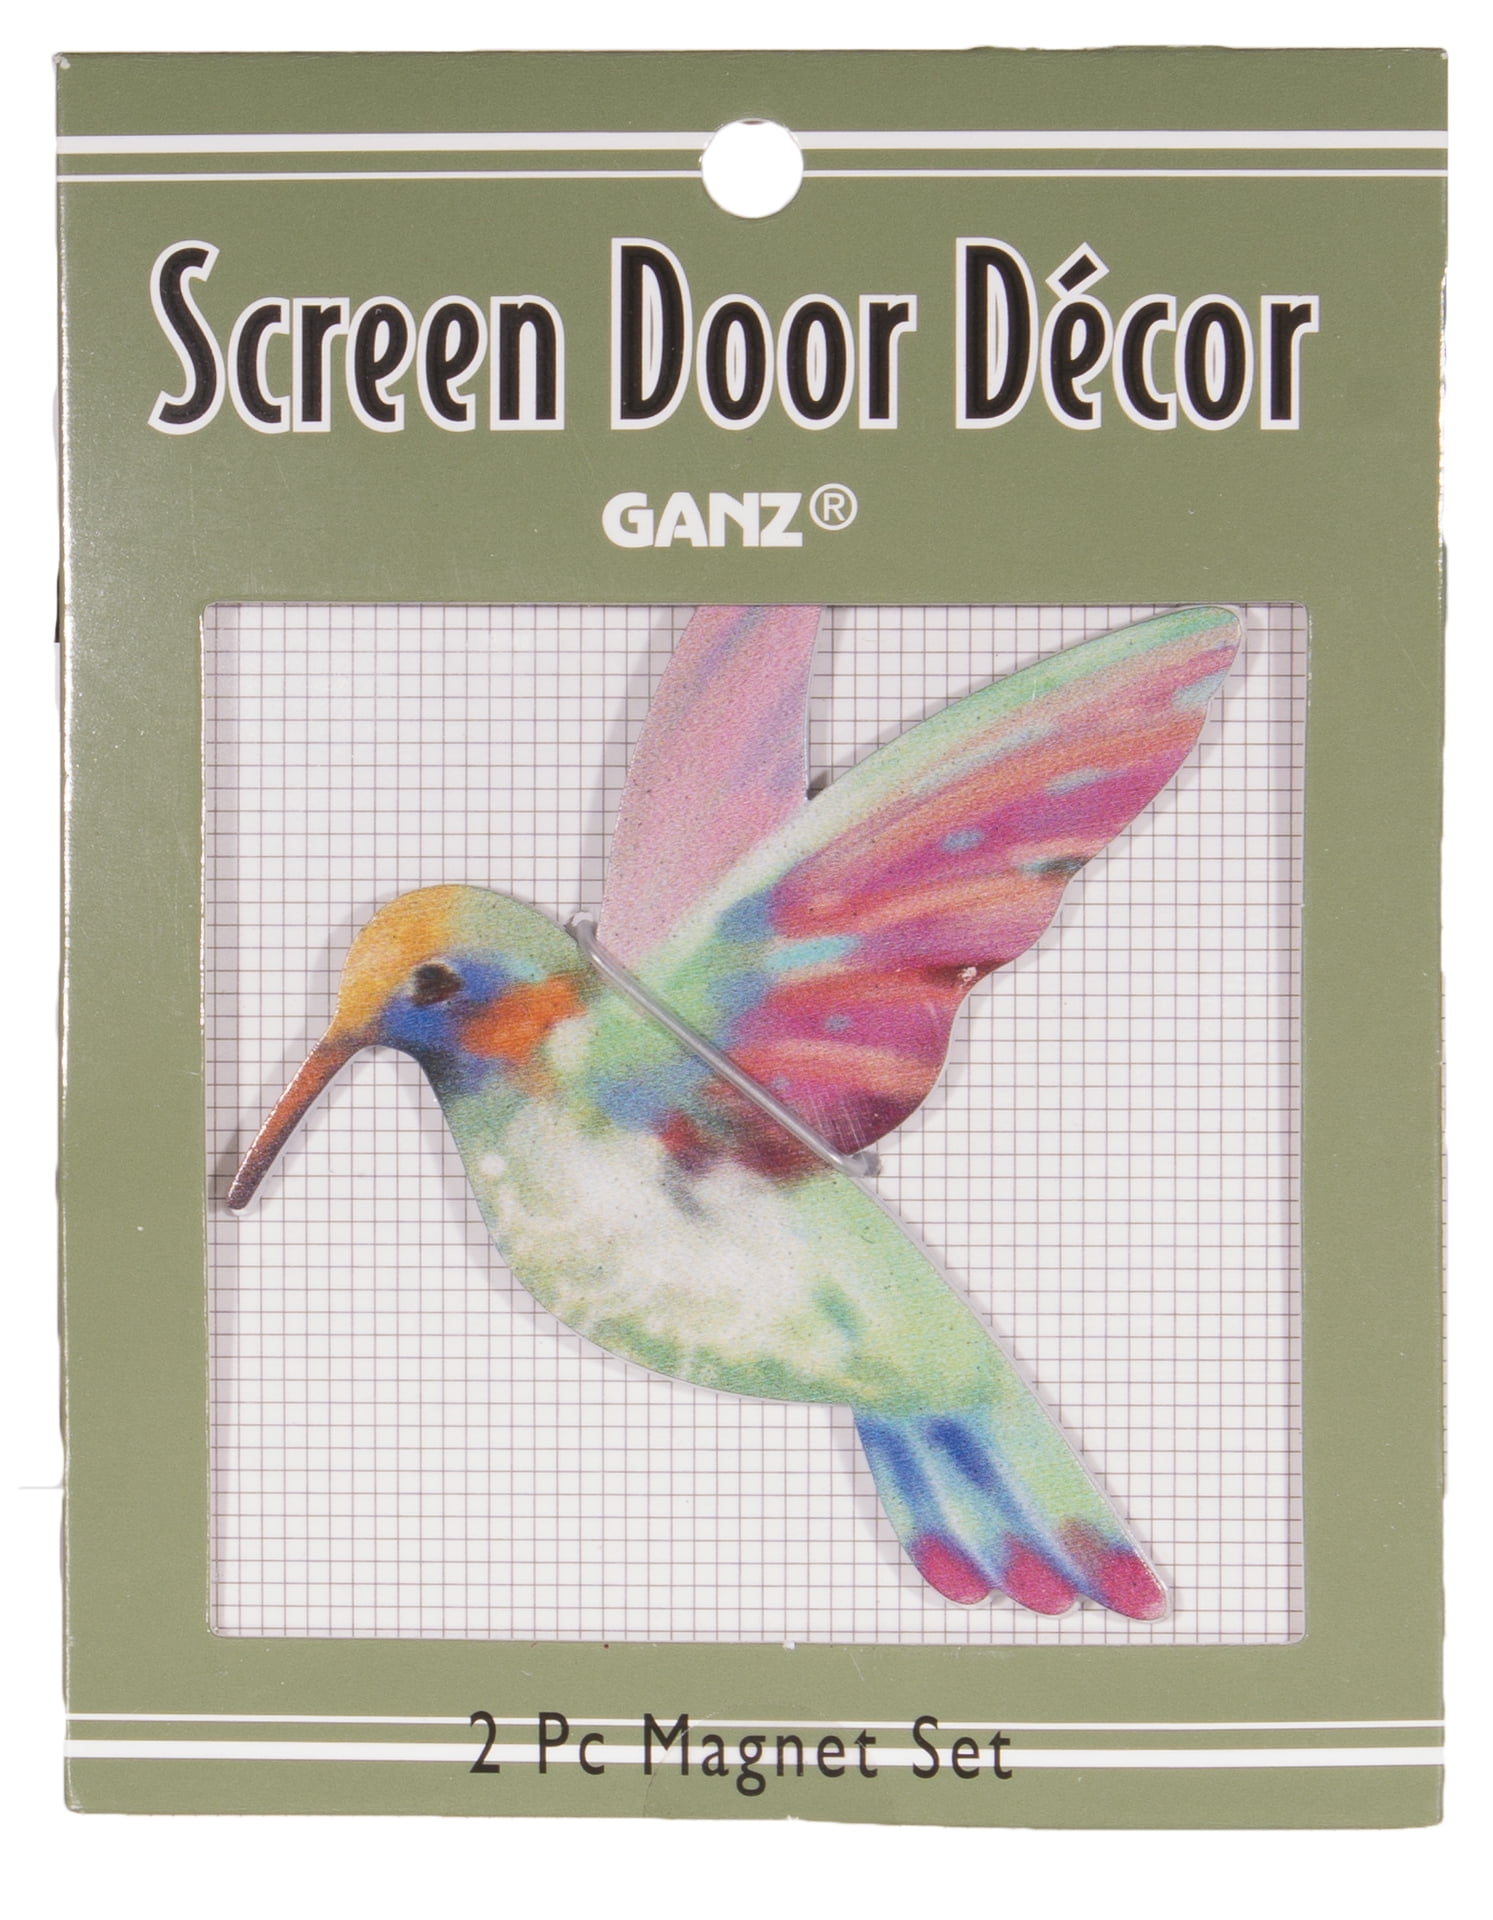 Hummingbird Screen Door Decor Saver 2pc Magnet Set Ganz New colorful Metal 